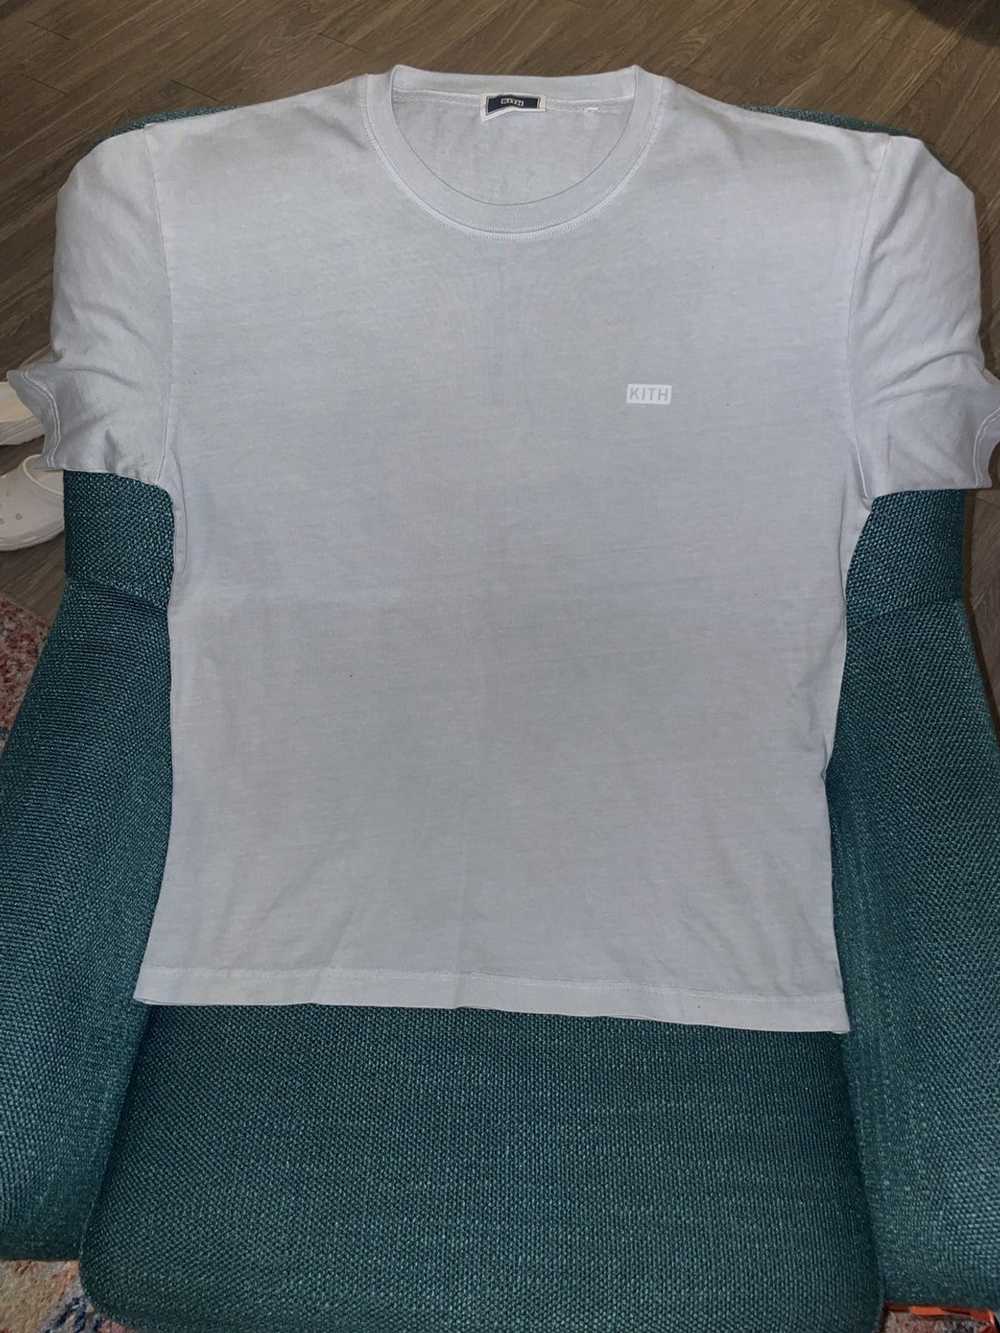 Kith Kith short sleeve t-shirt - image 1